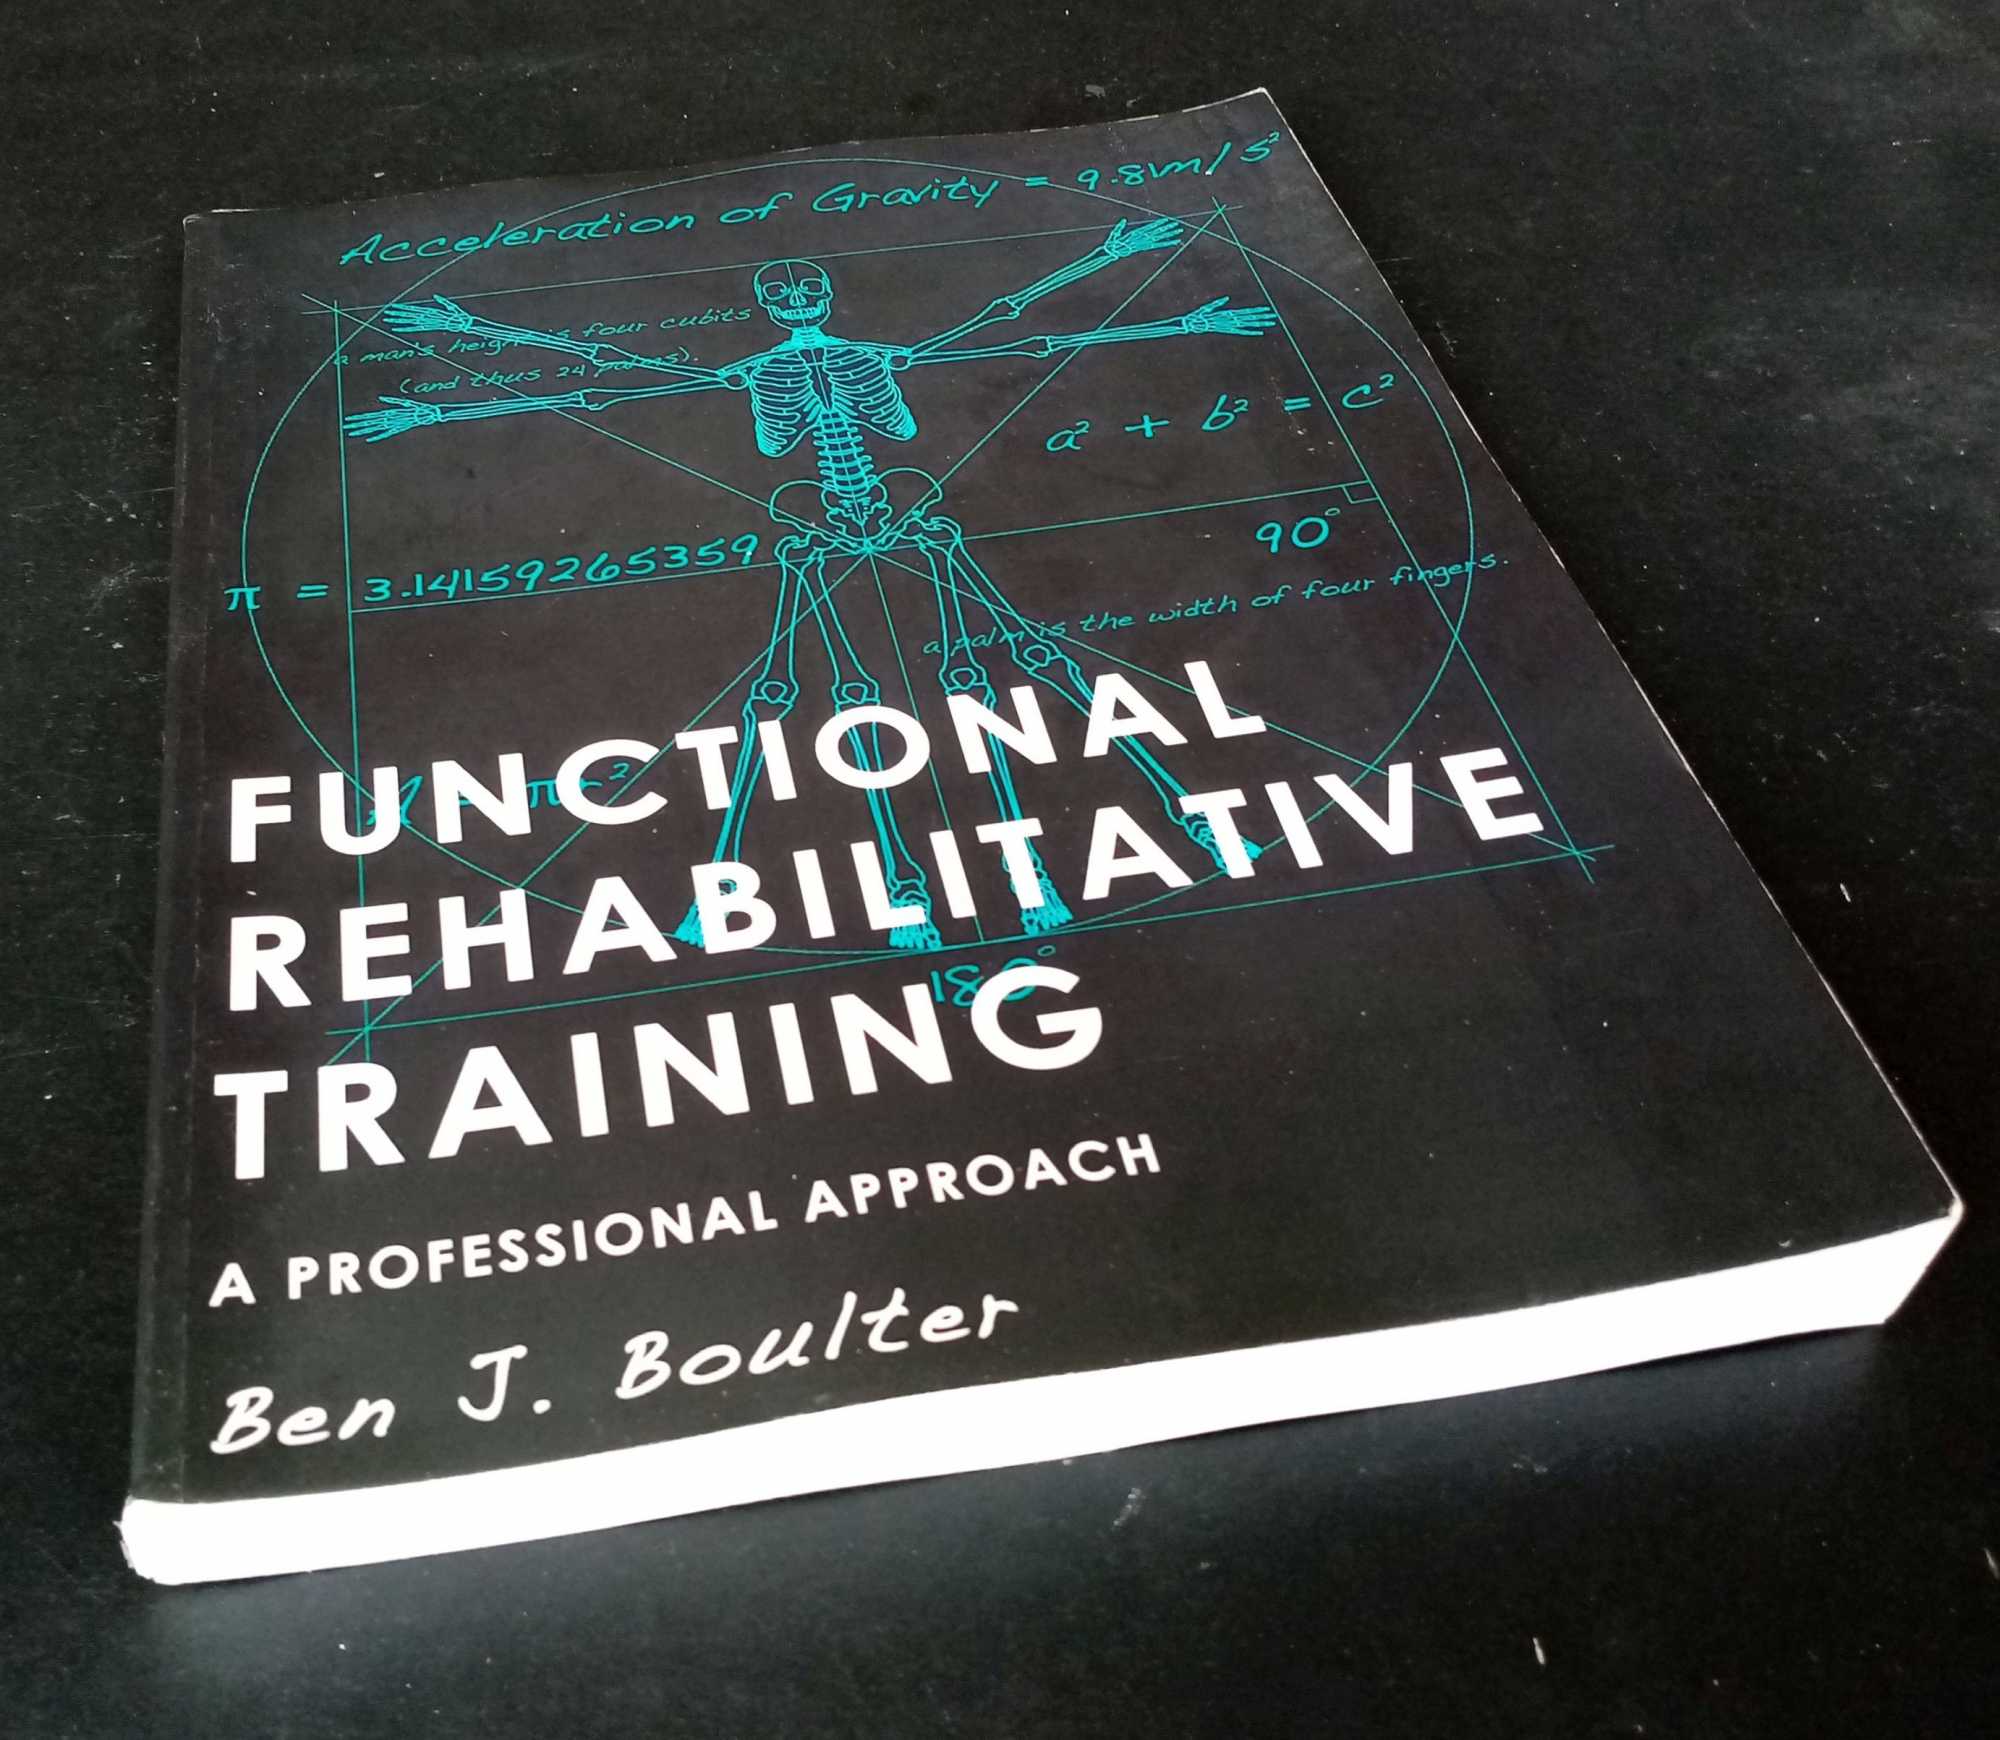 Ben Boulter - Functional Rehabilitative Training: A Professional Approach